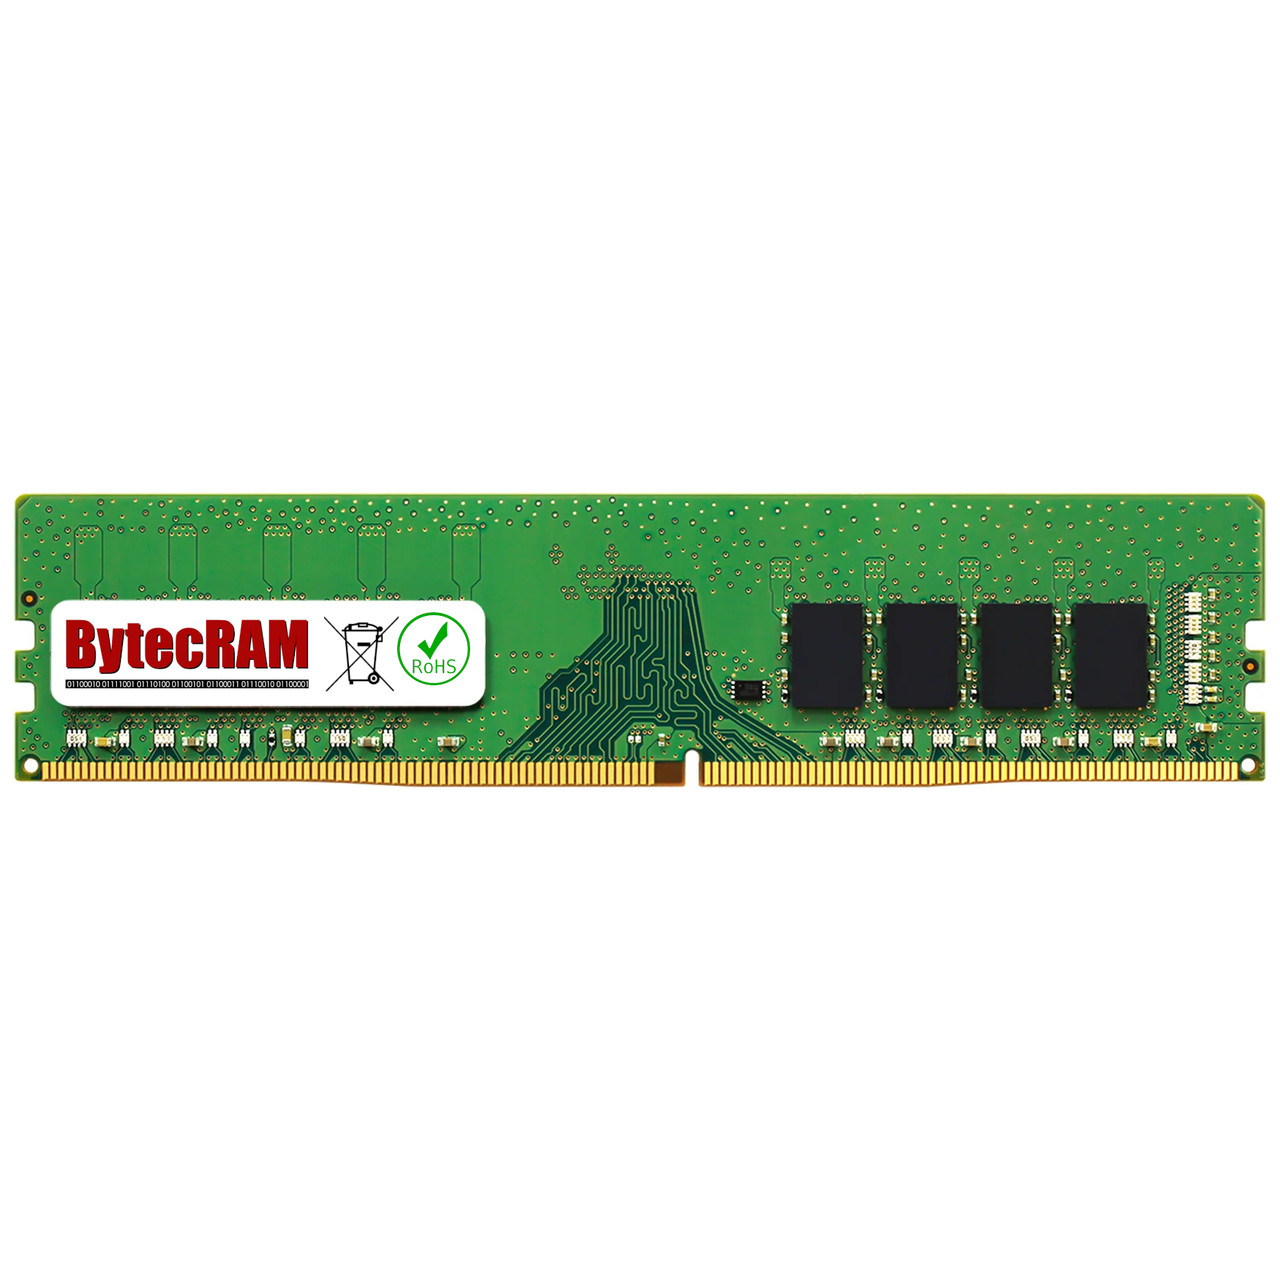 eBay*8GB Acer Predator G3-710 DDR4 2666MHz UDIMM Memory RAM Upgrade